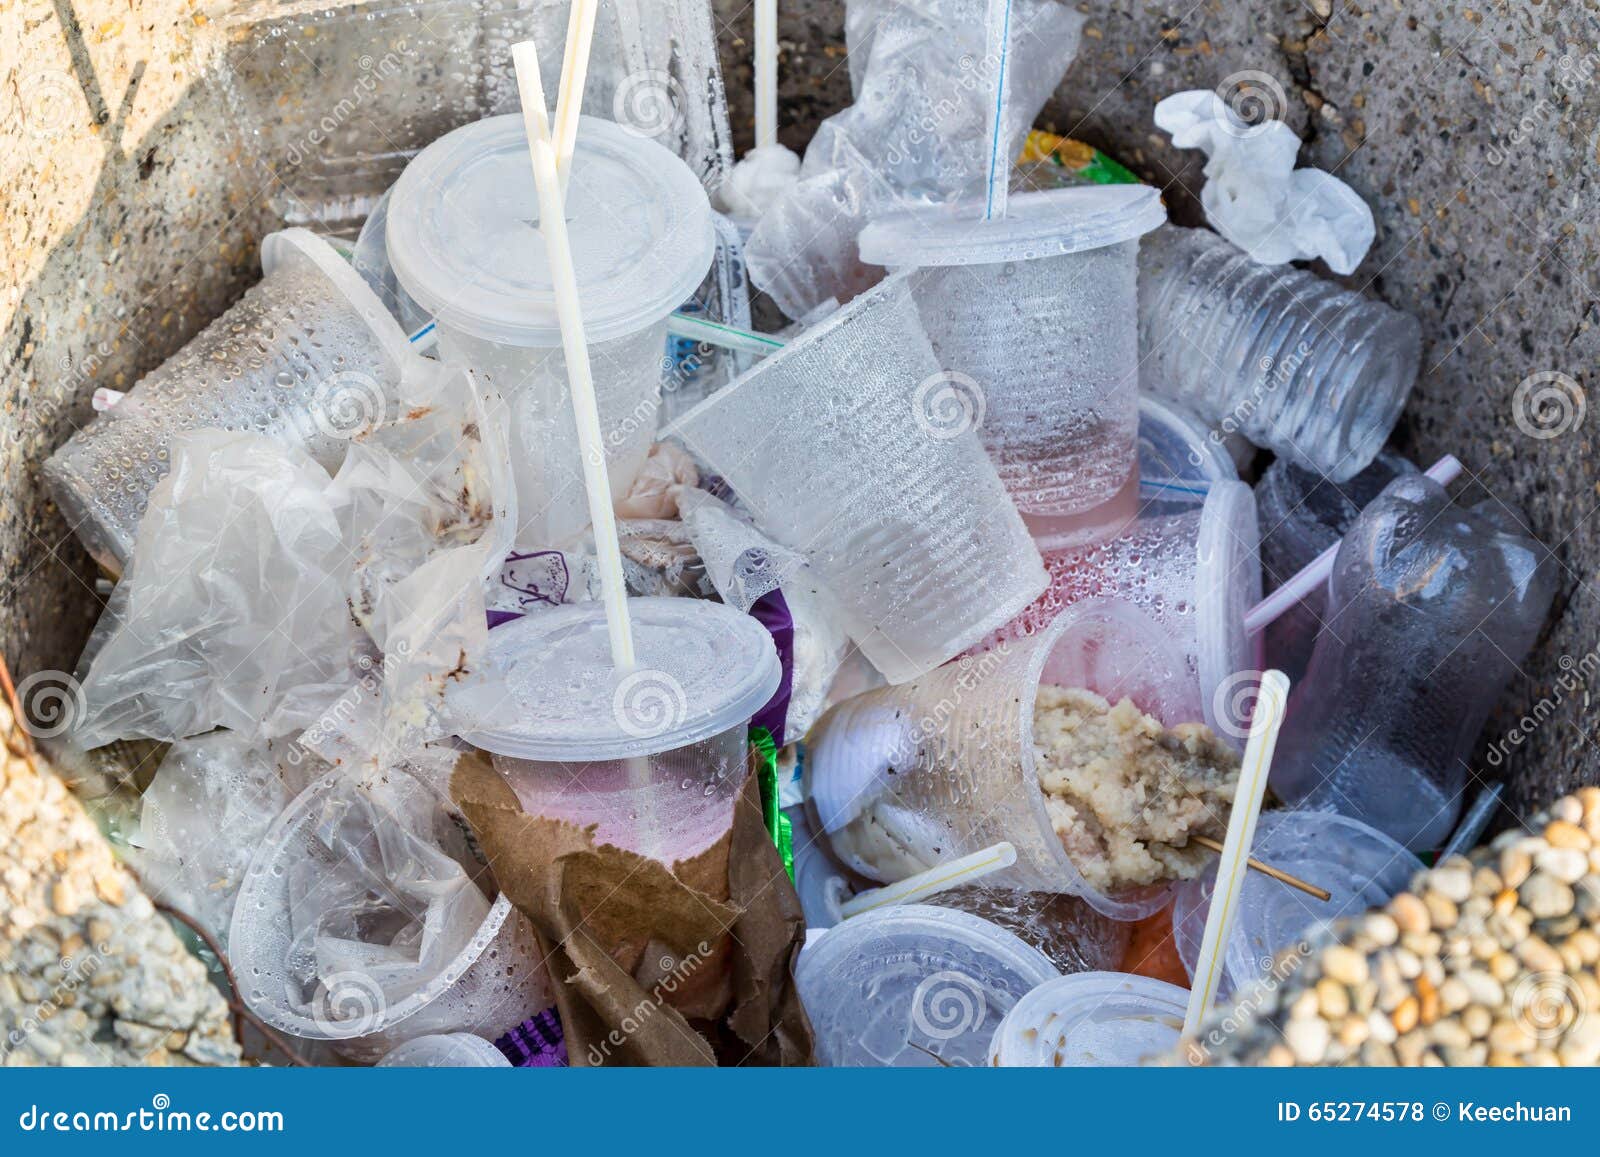 Share 139+ plastic bags are non biodegradable latest - esthdonghoadian